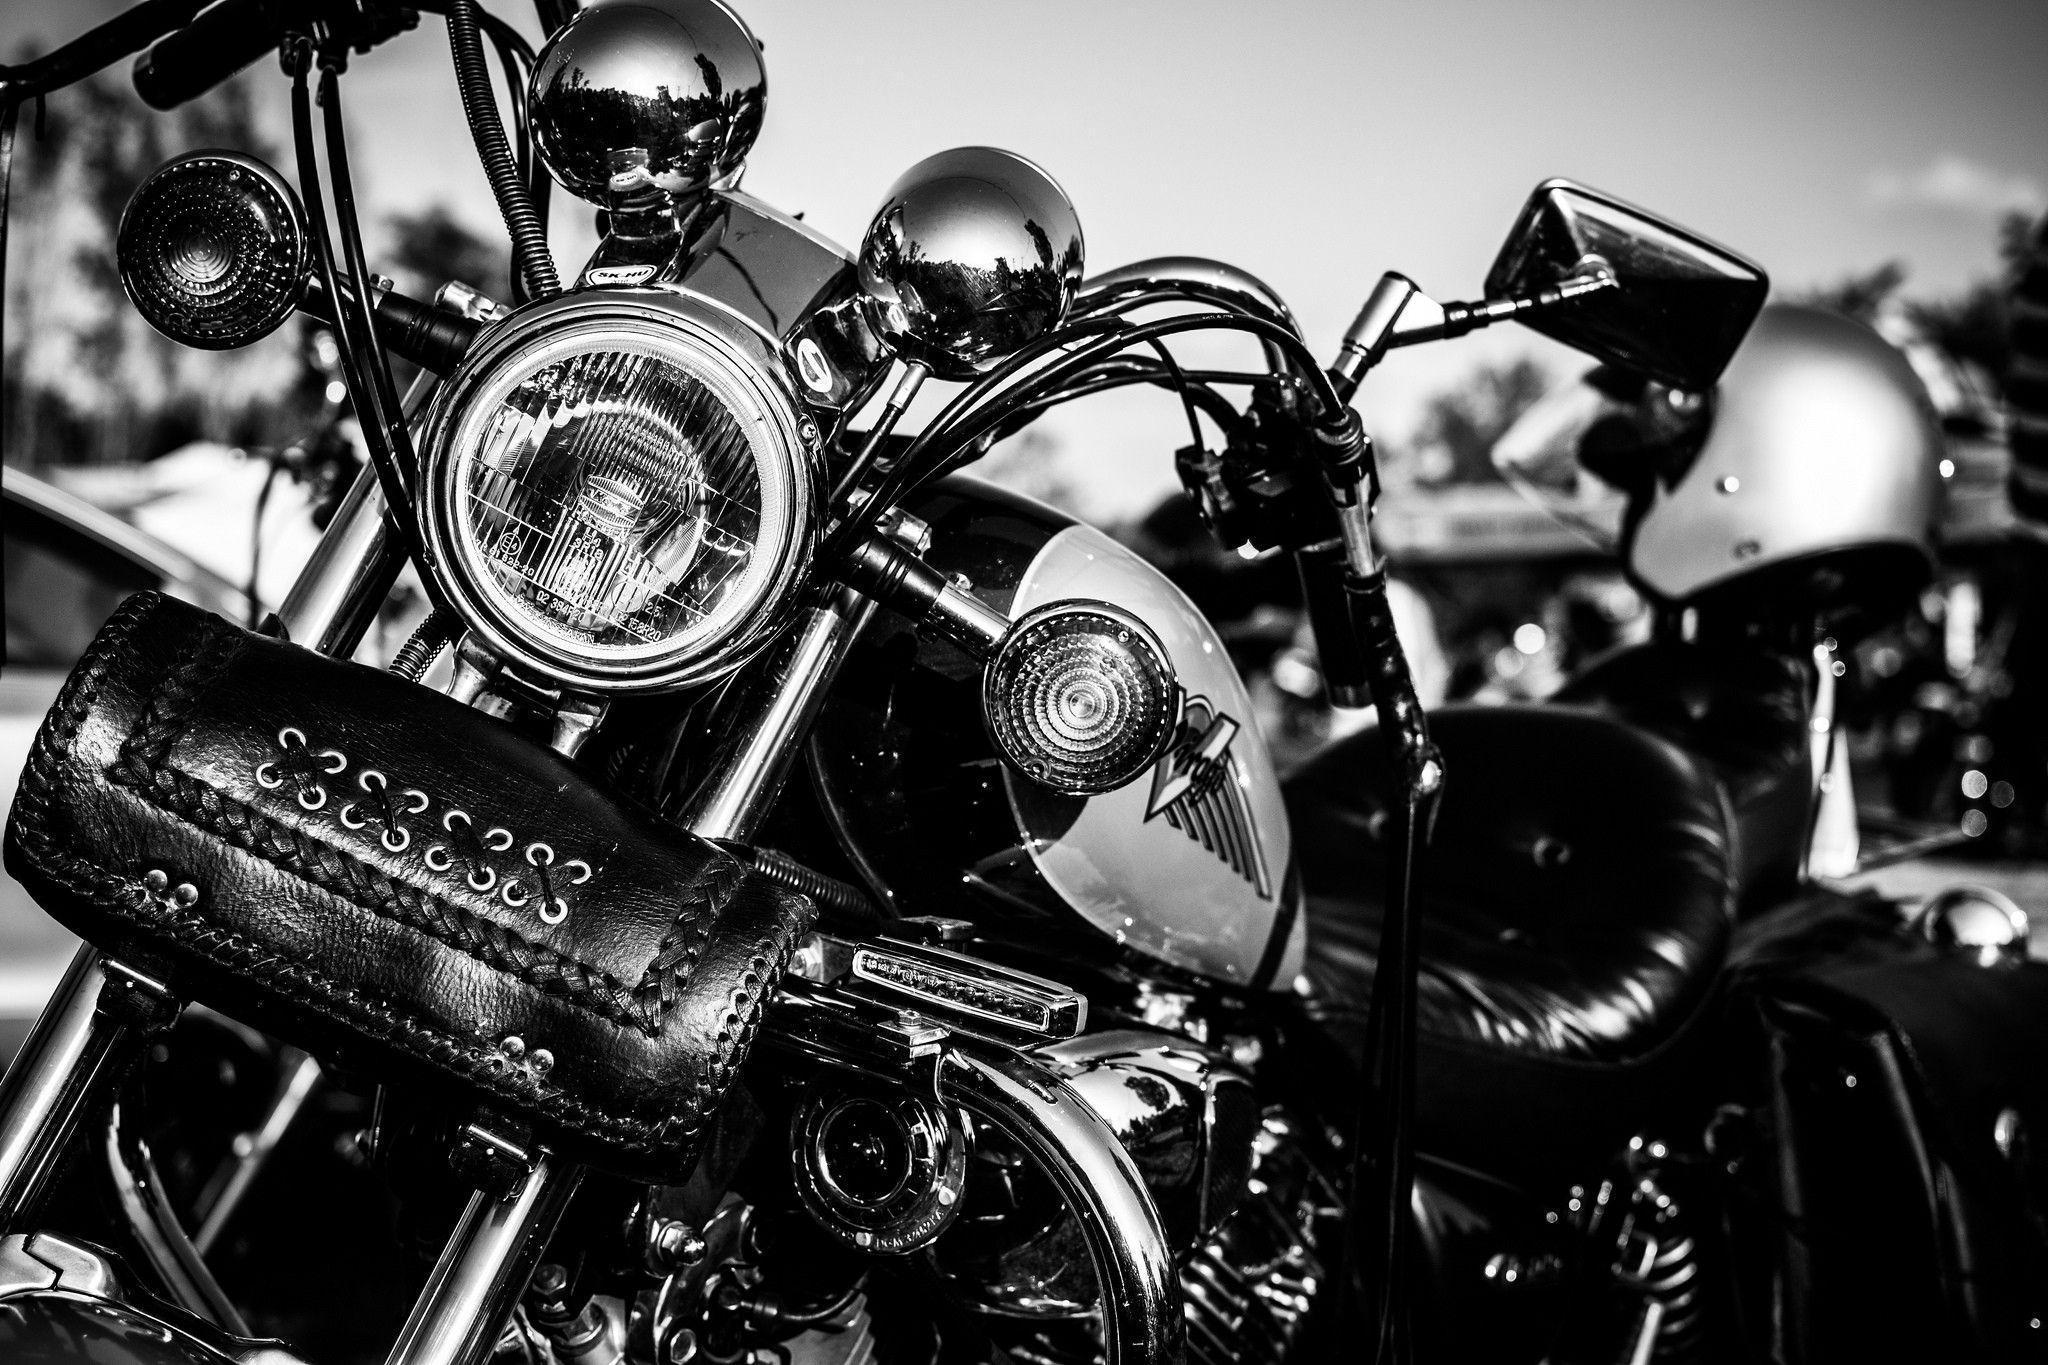 Harley Motorcycles Wallpaper Background 1 HD Wallpaper. lzamgs